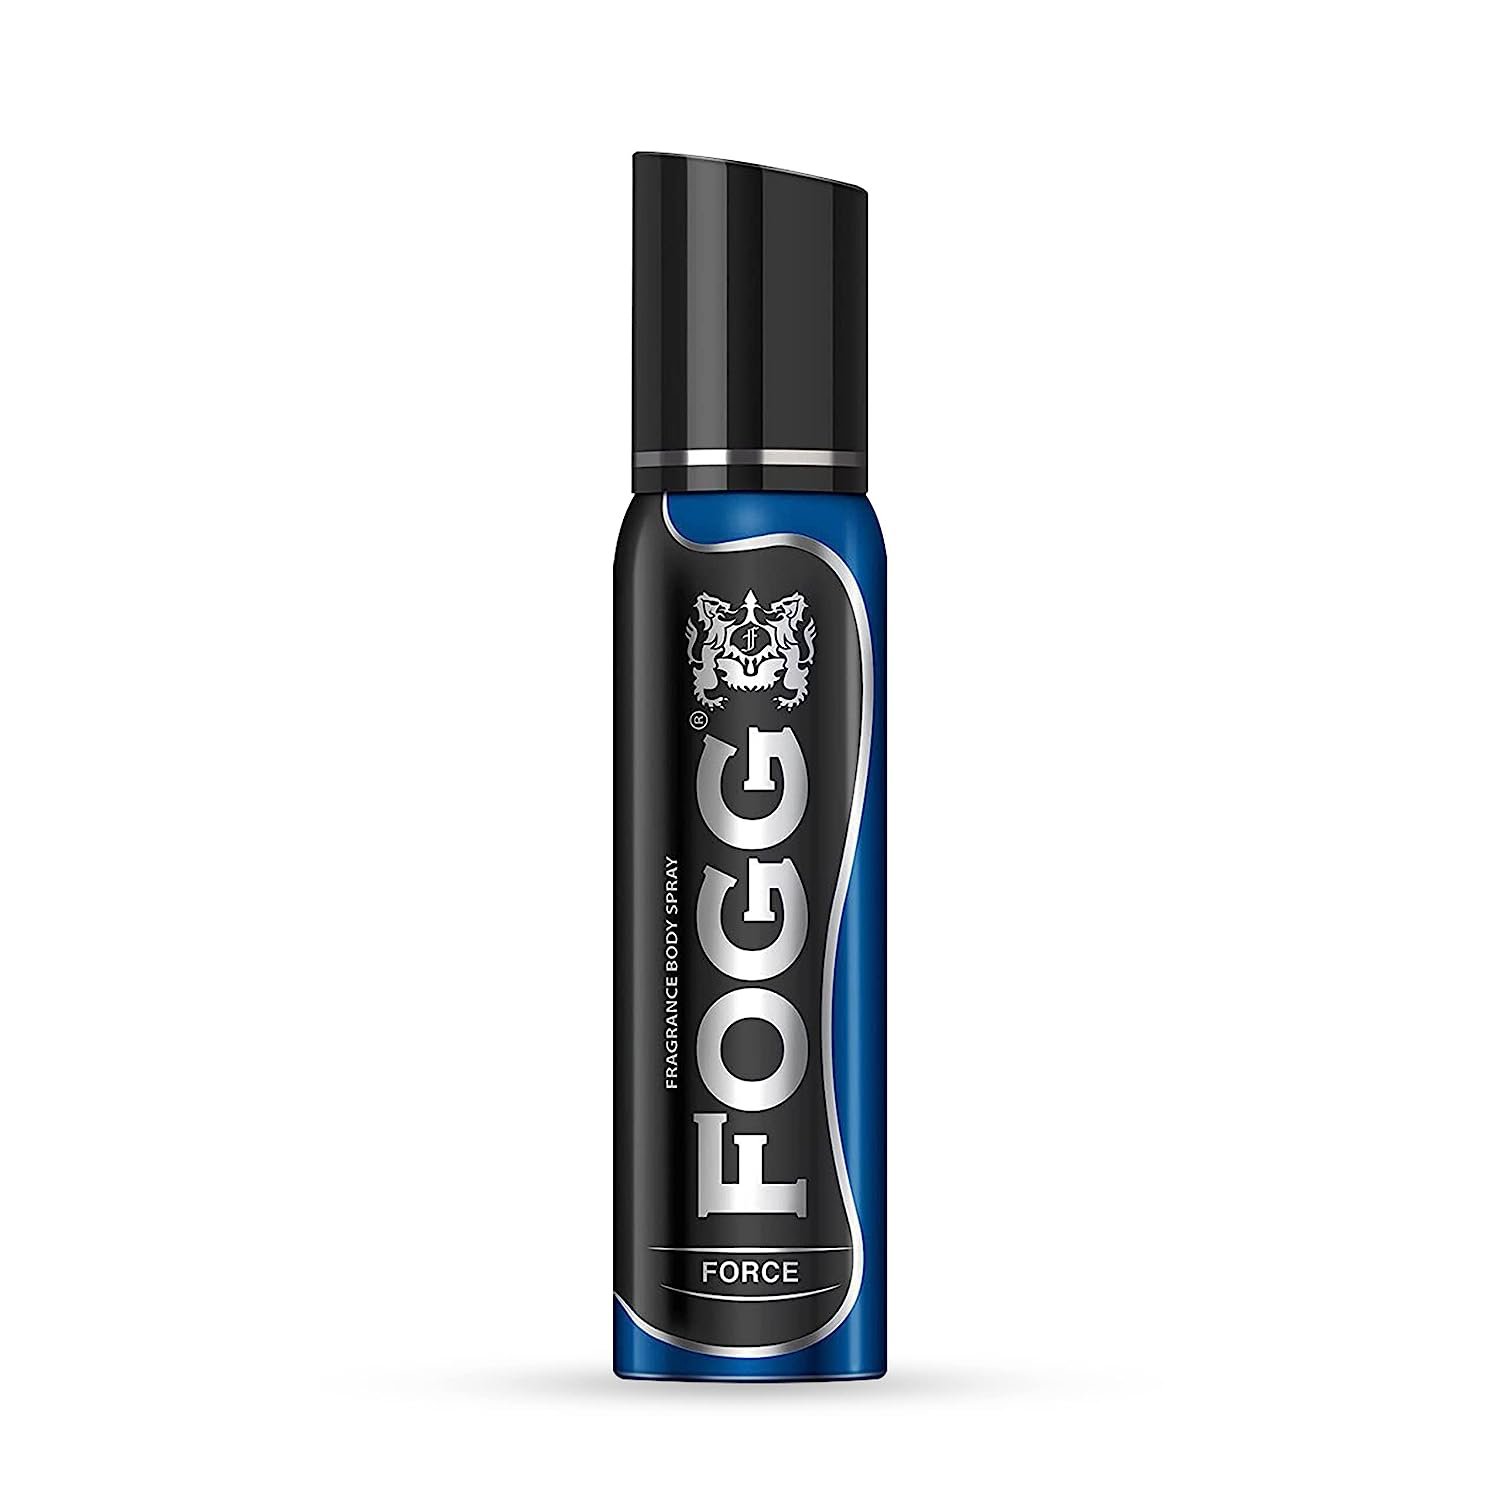 Fogg Force Perfume Body Spray, Long Lasting No Gas Deodorant for Men, 150ml